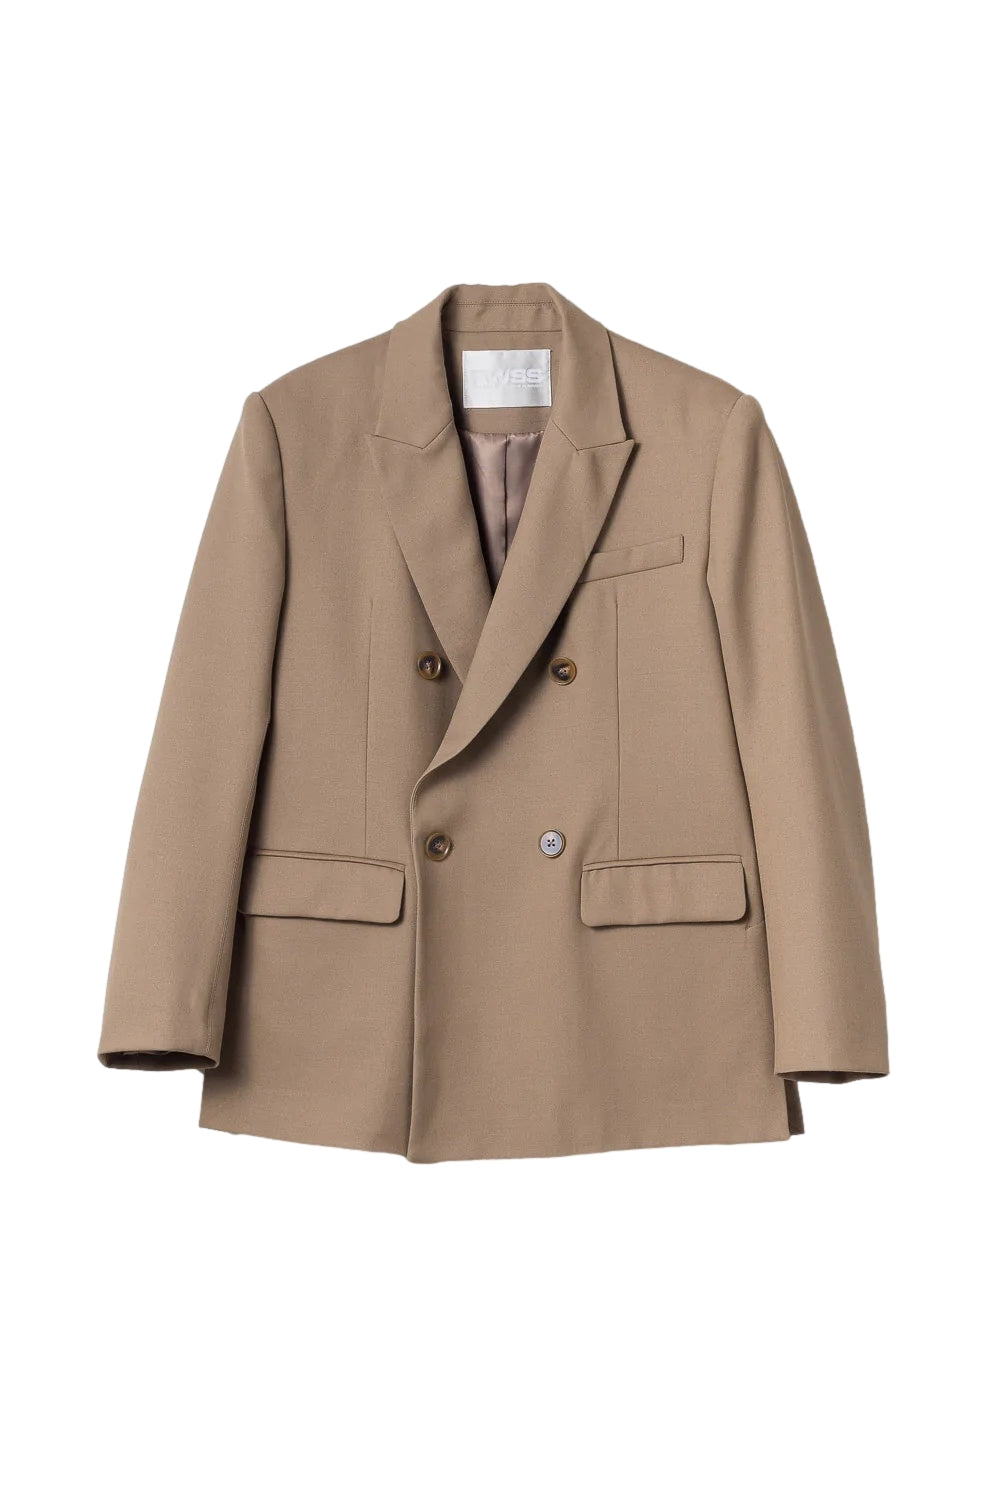 FWSS Tailored Suit Jacket Dressjakke Oliven - [shop.name]